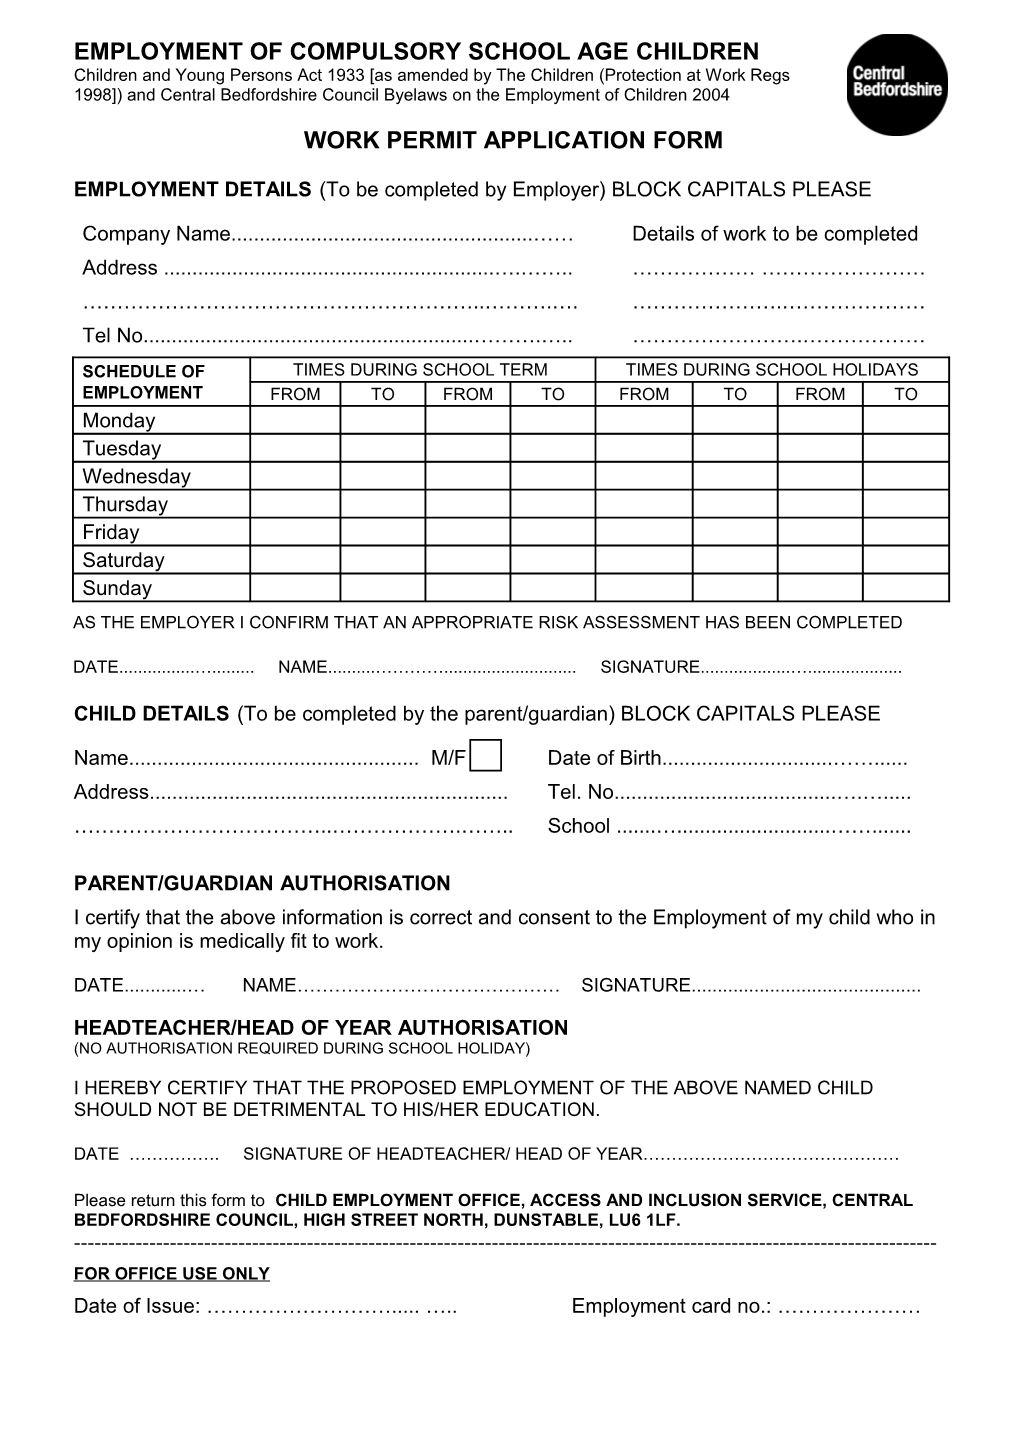 Work Permit Application Form